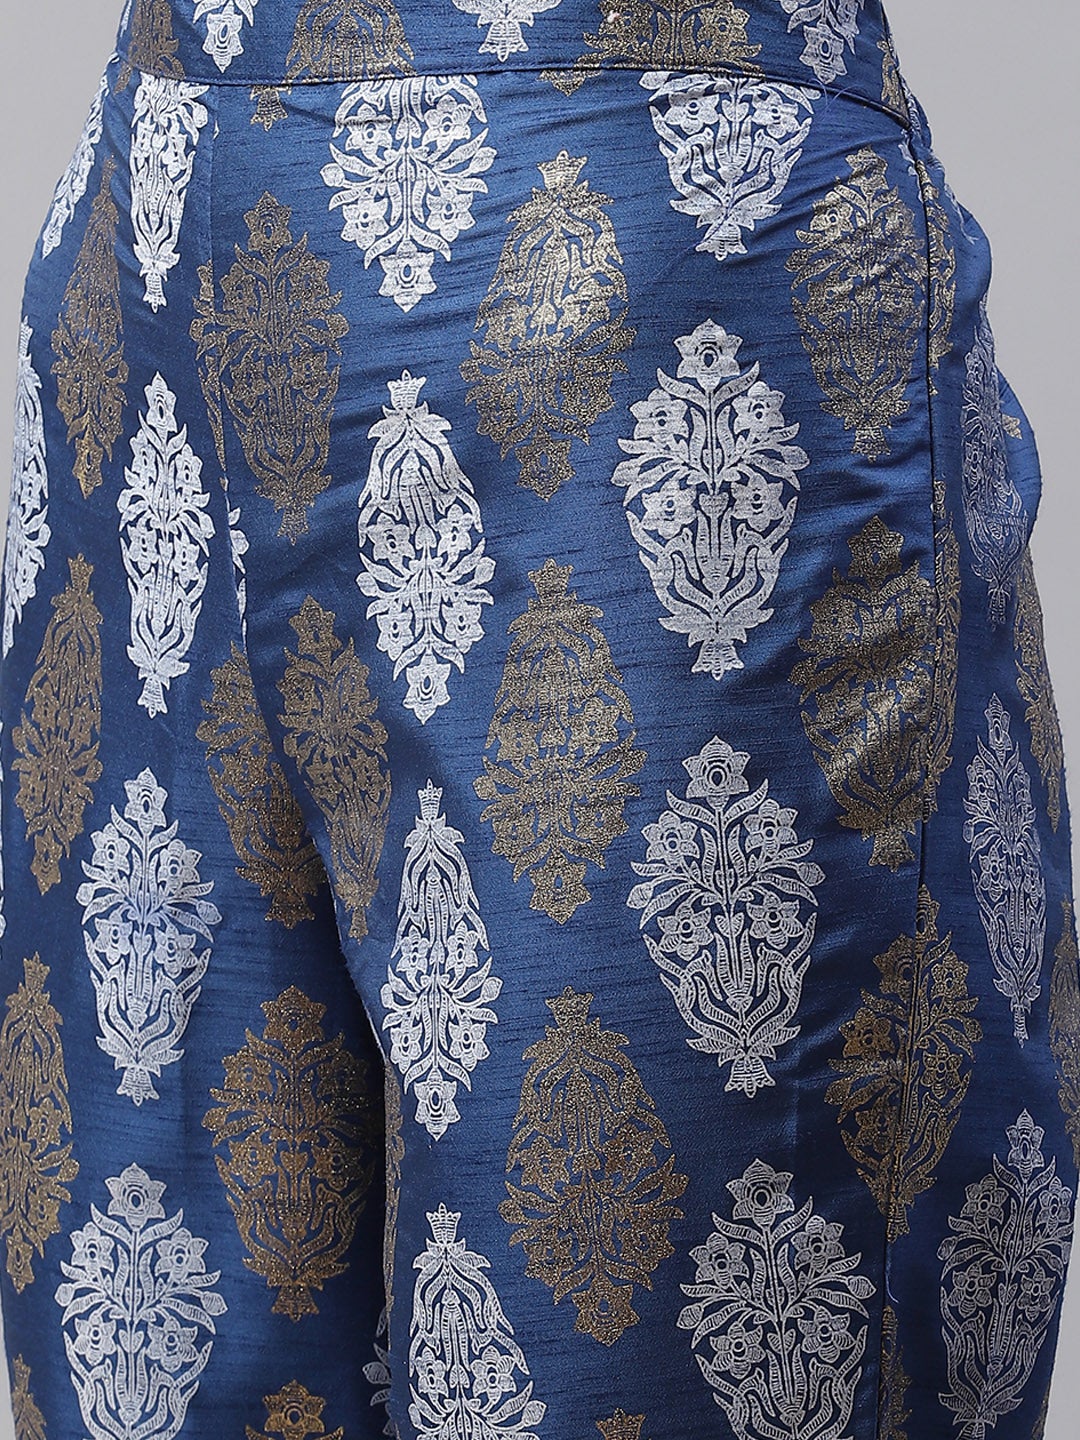 Mindhal Women's Blue Color Dyed Straight Kurta,Pant And Dupatta Set